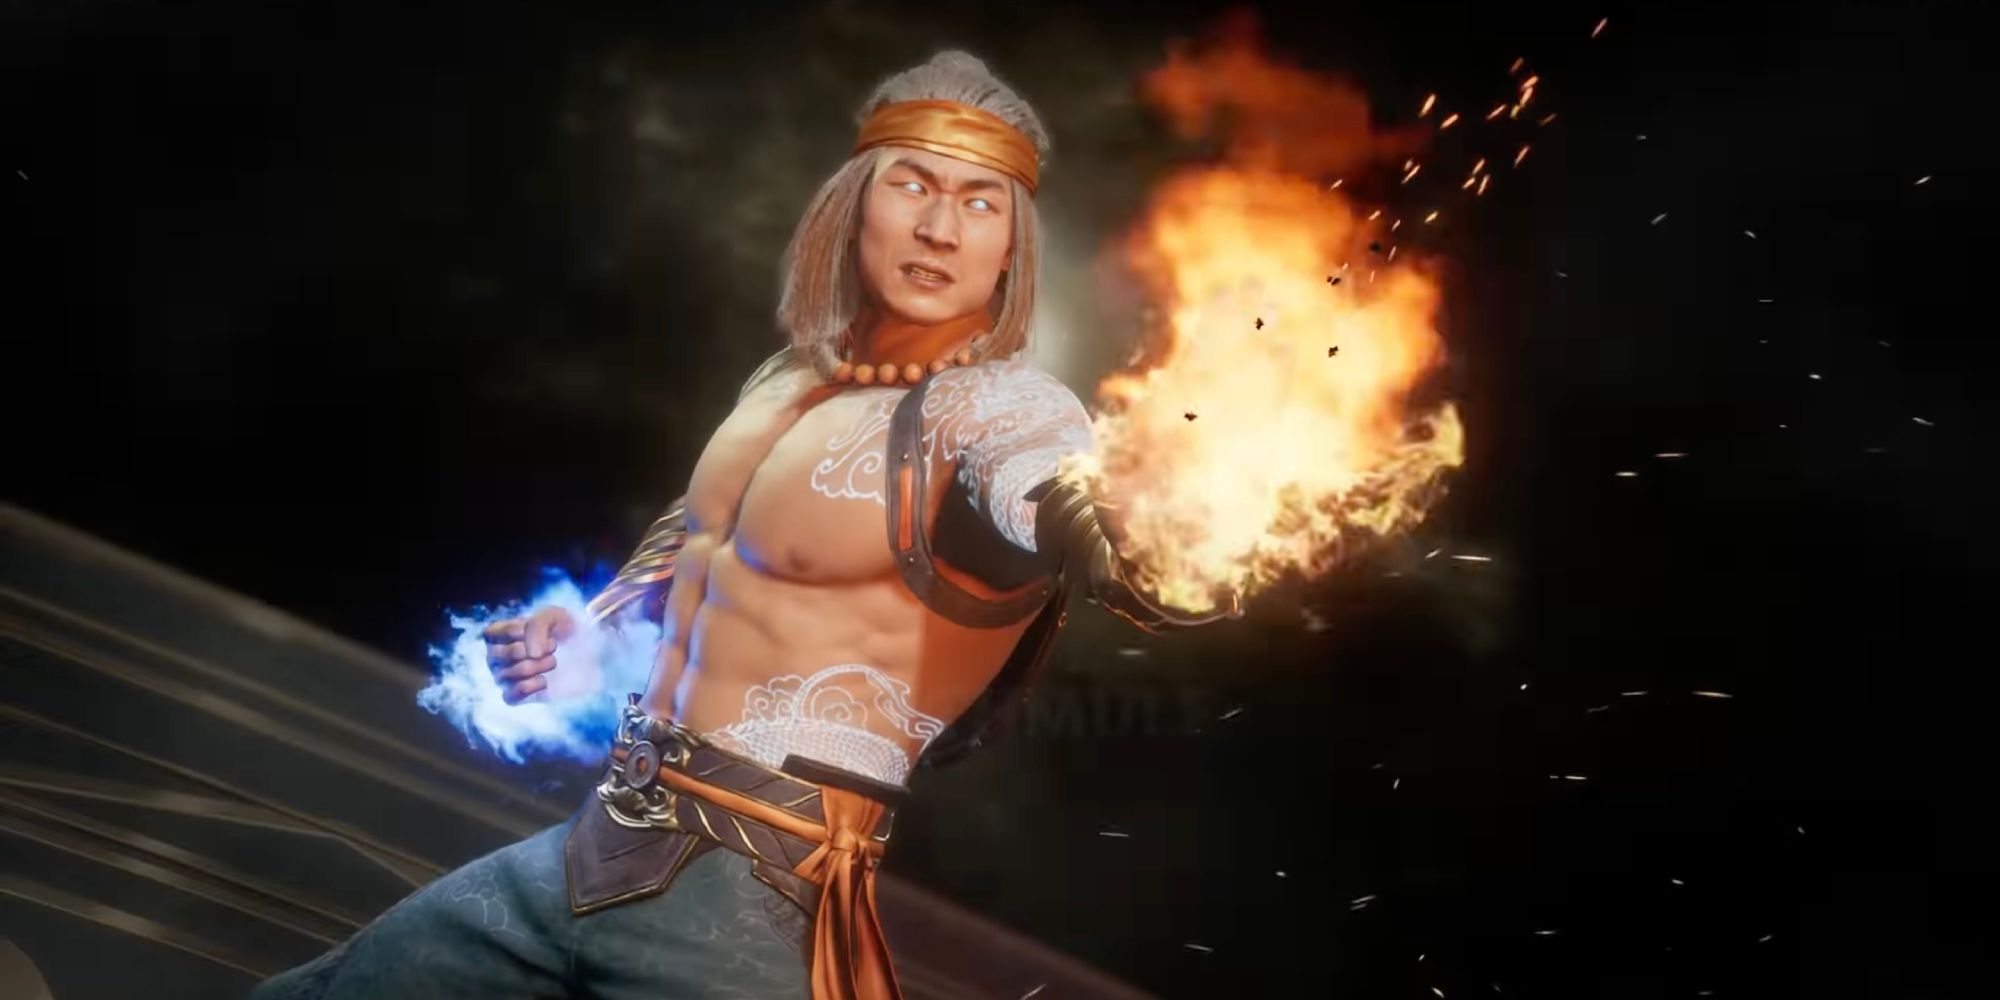 Liu Kang from Mortal Kombat shooting fire from his hands